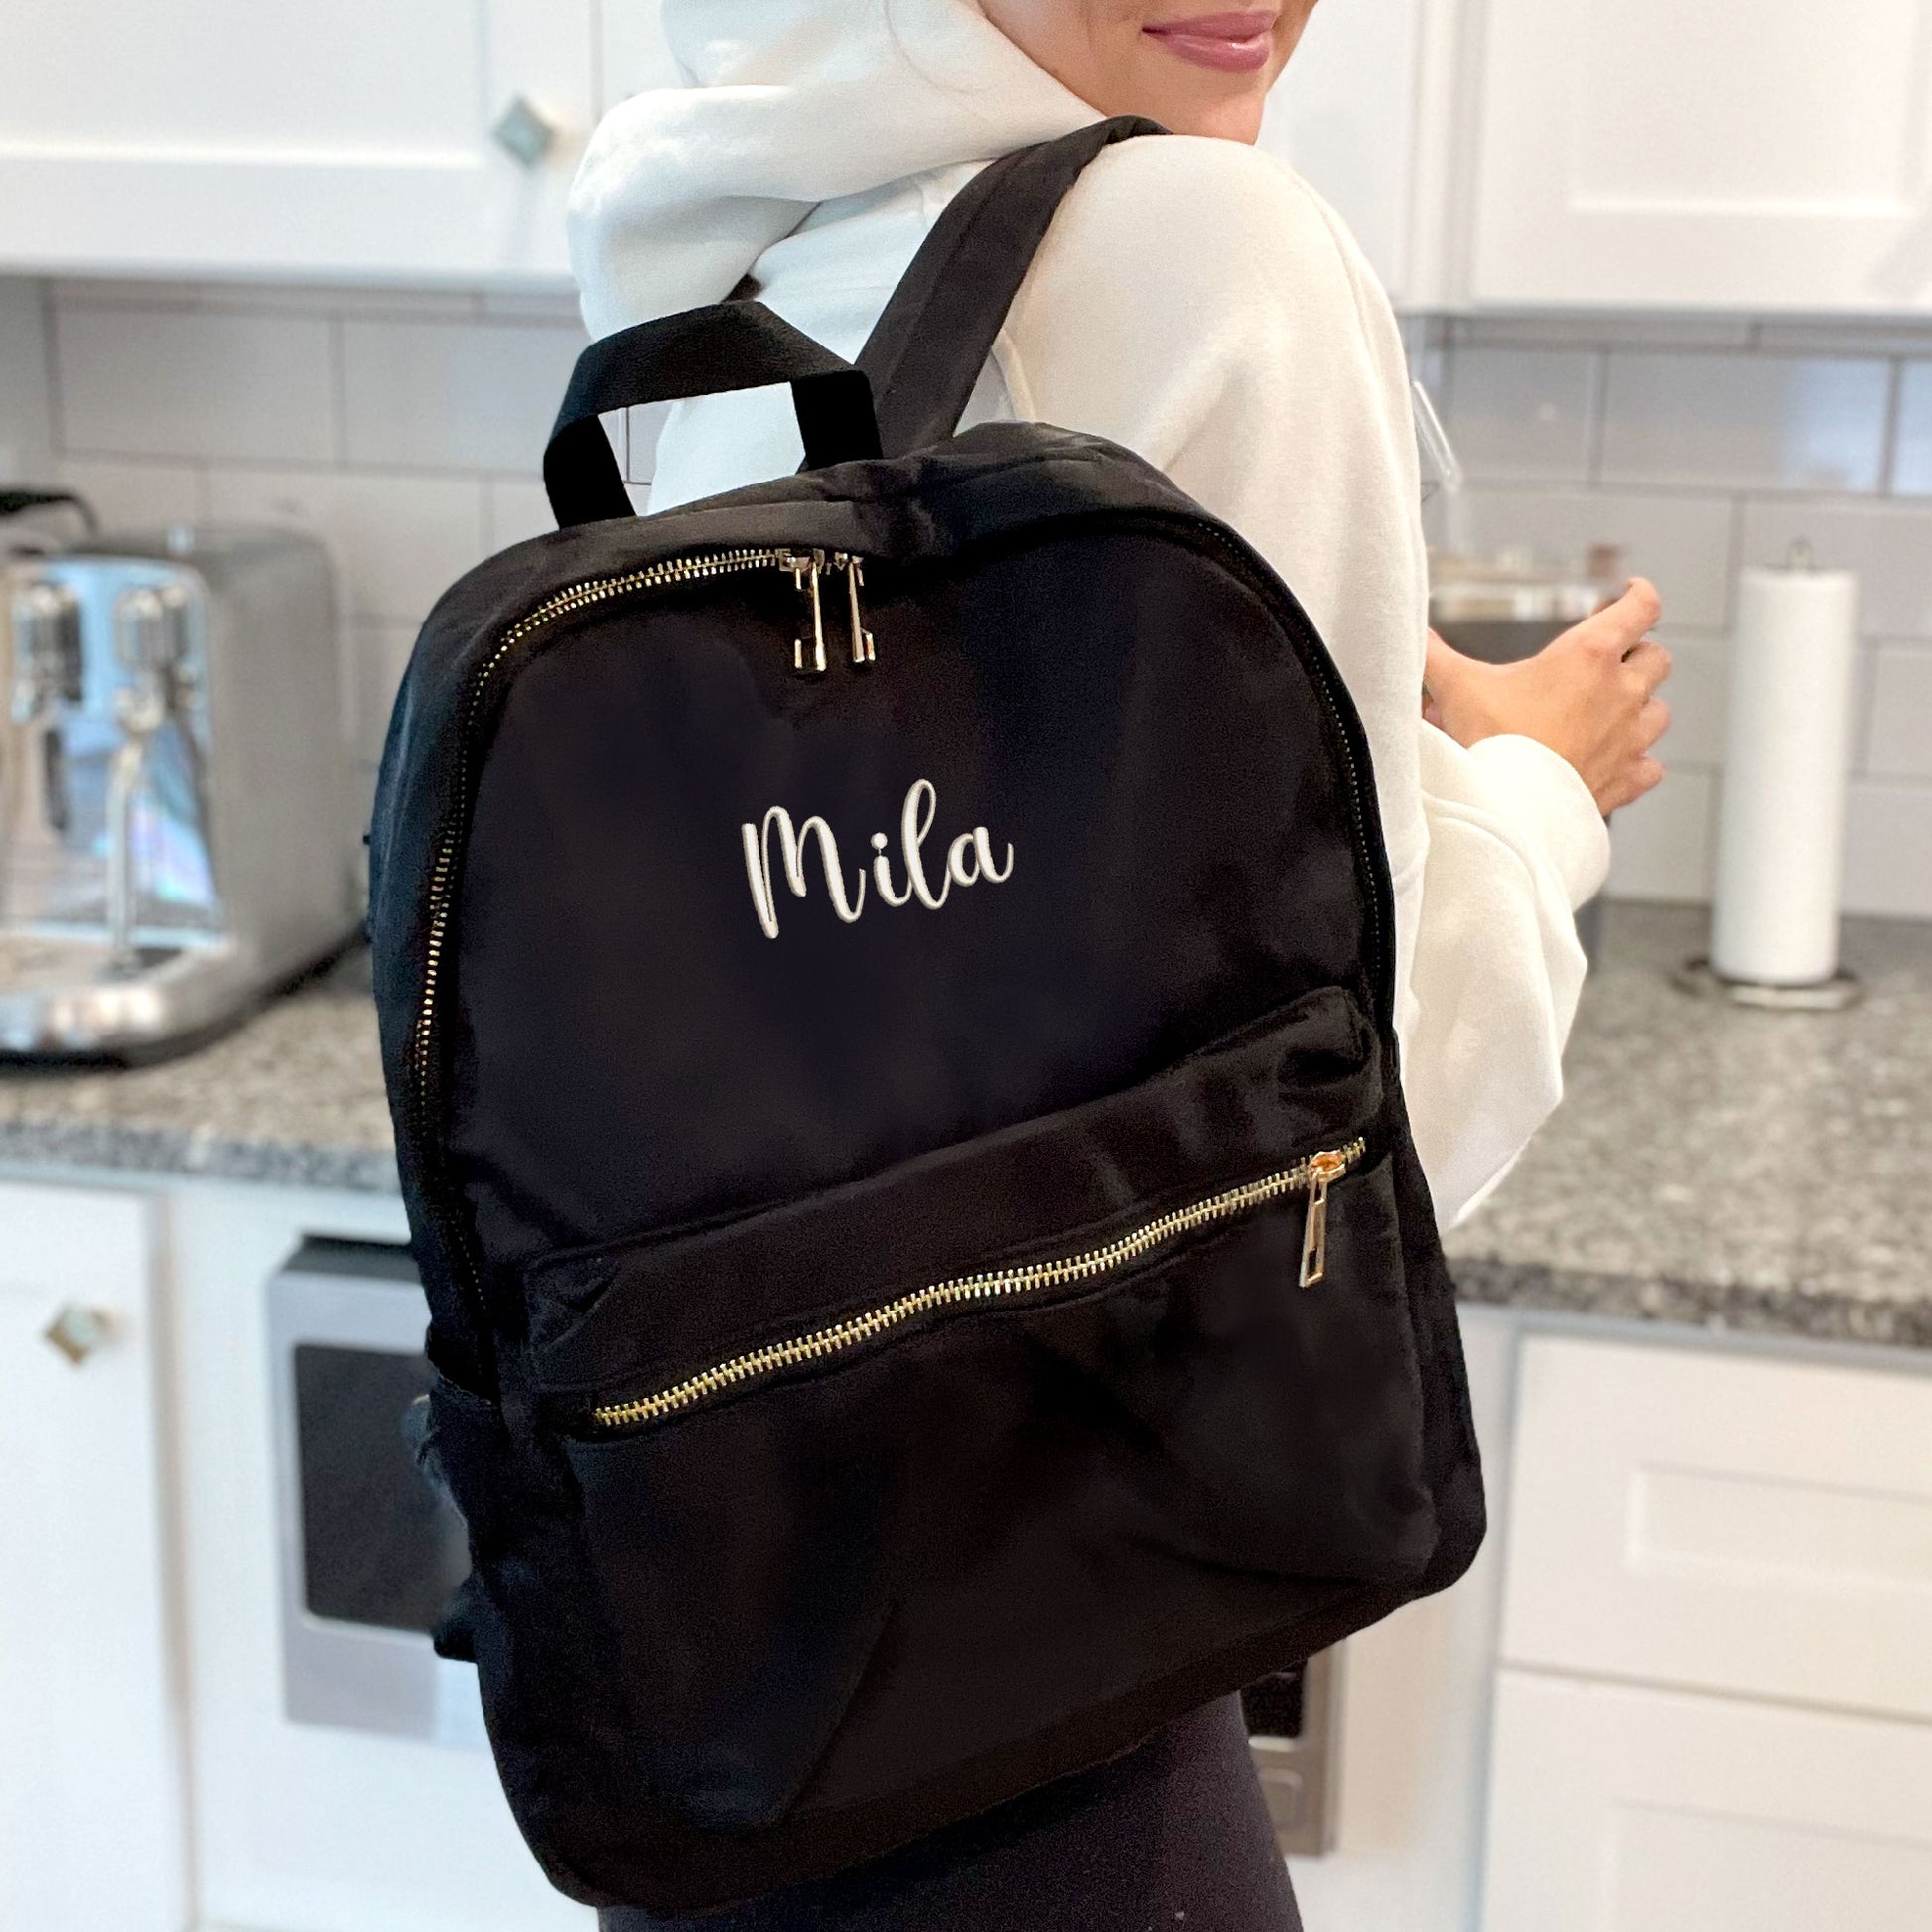 black nylon backpack with custom monogrammed name 